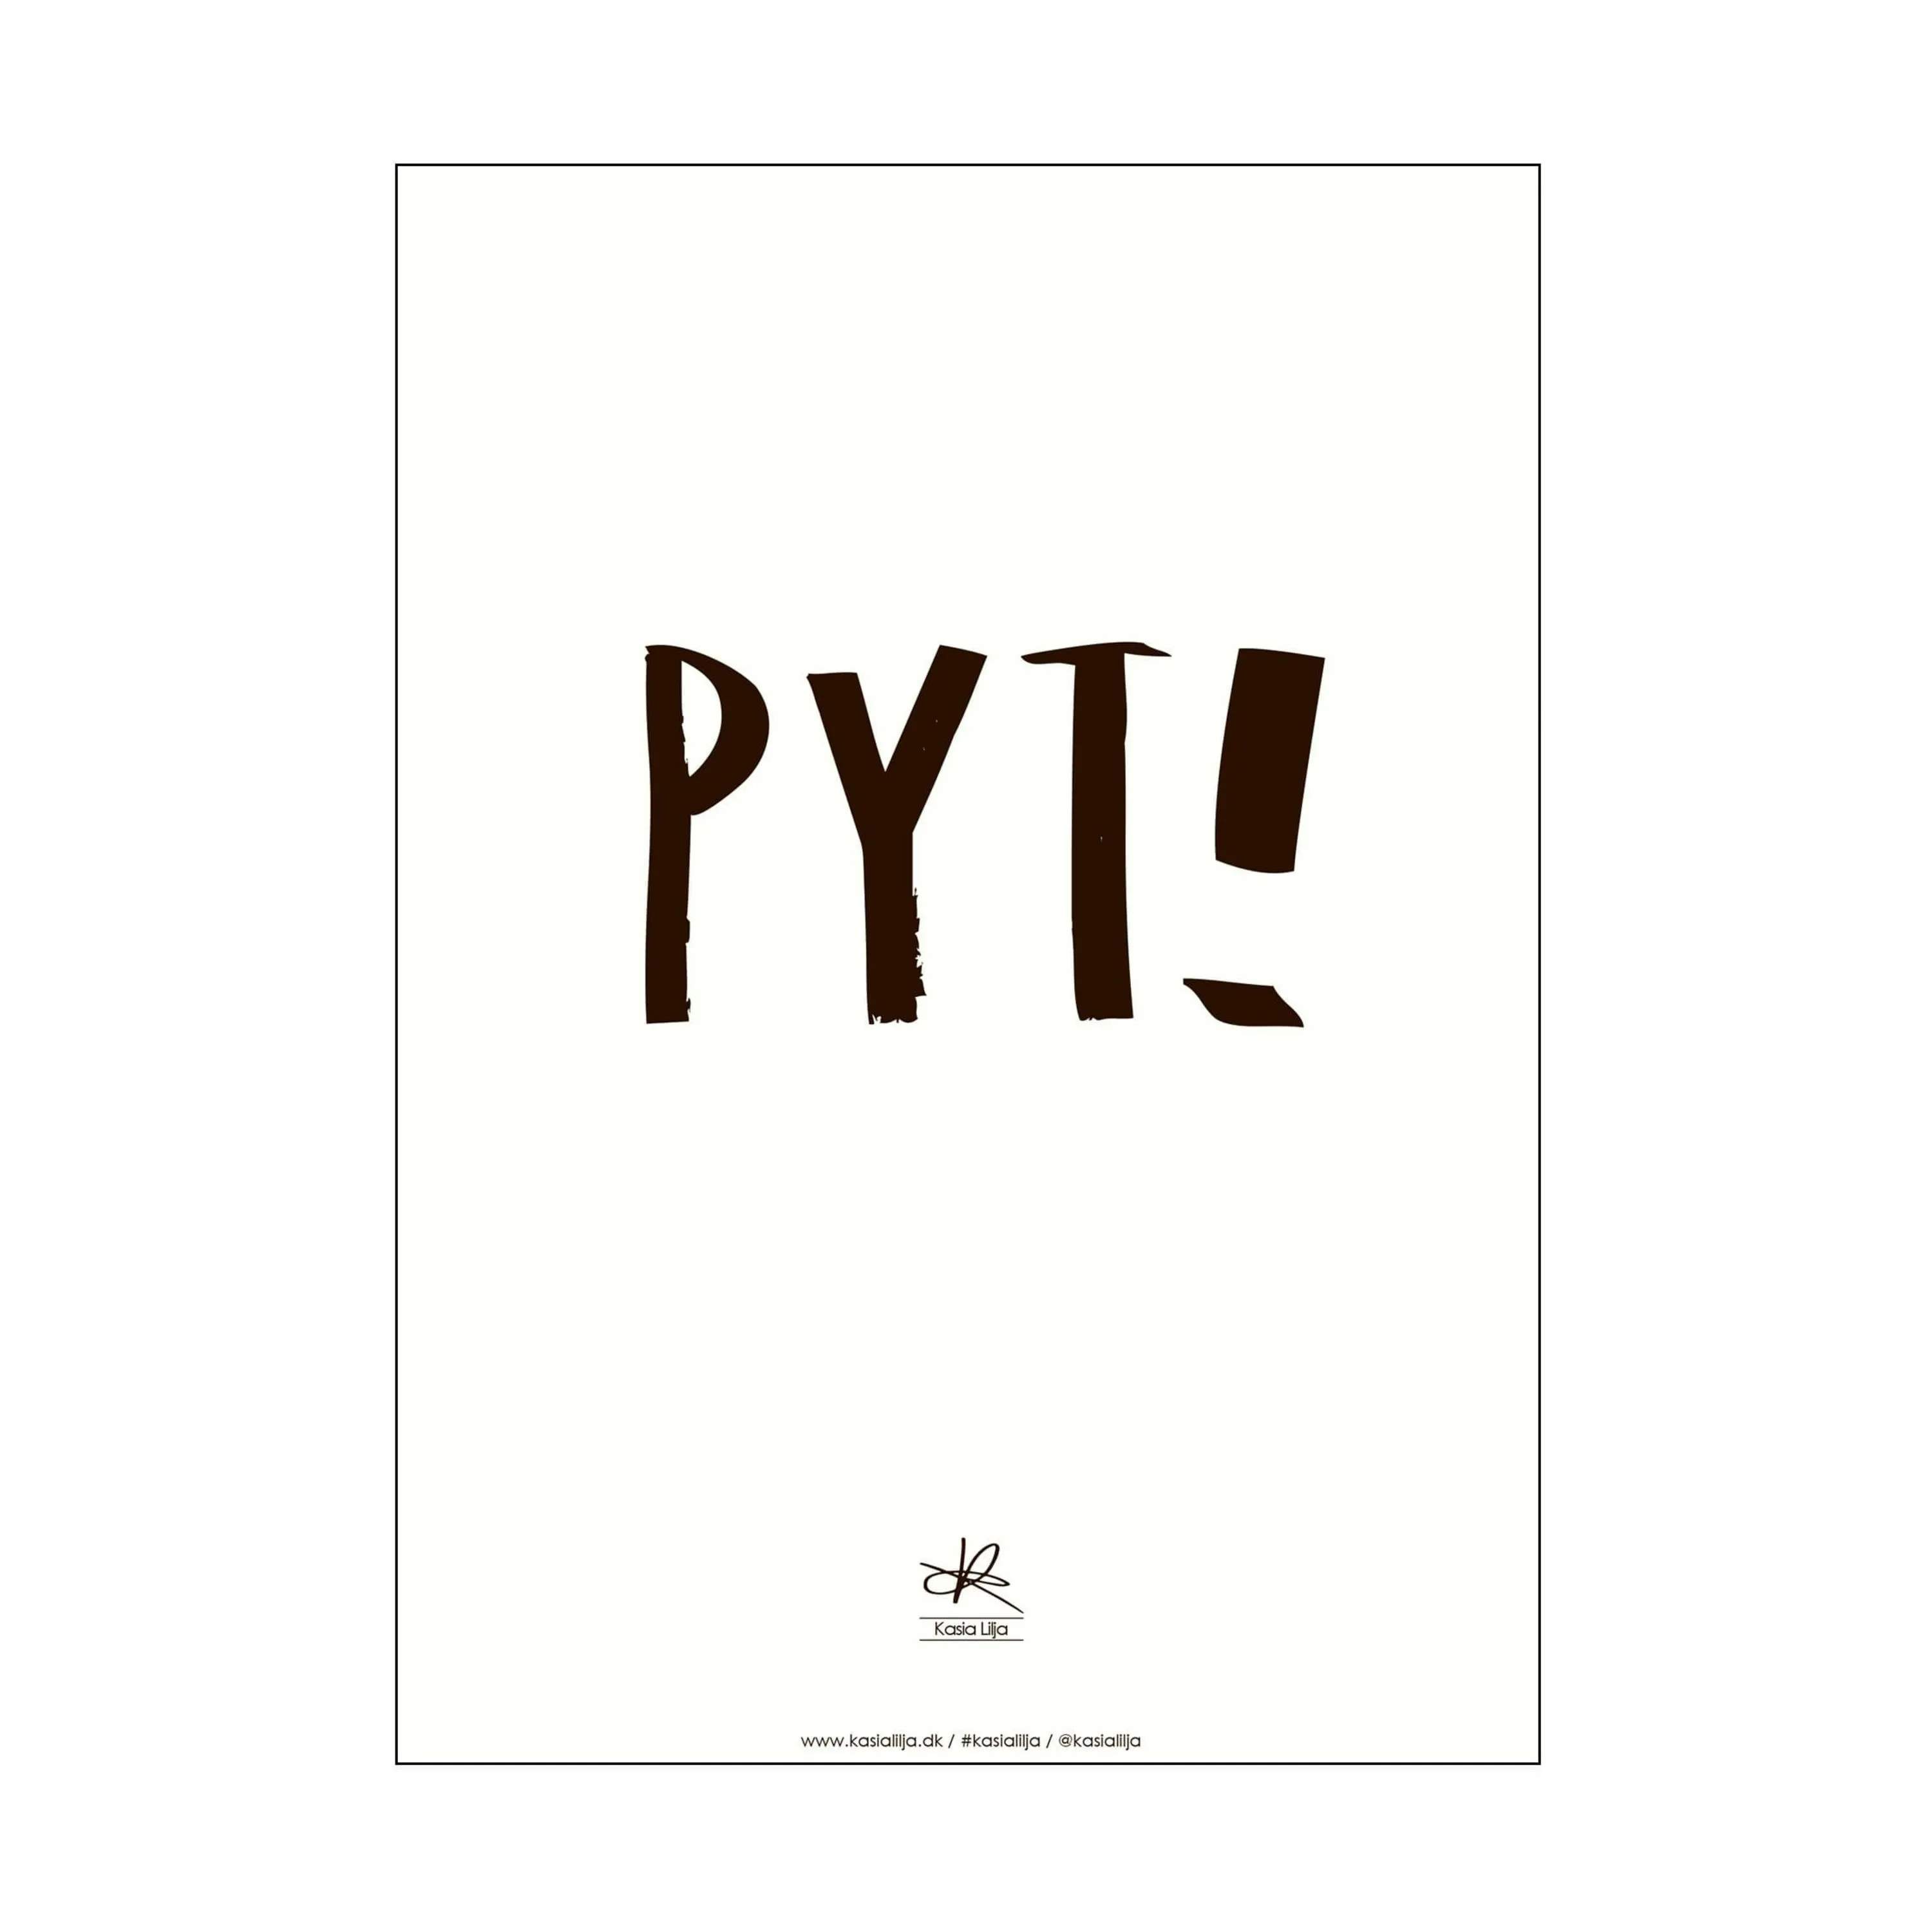 Plakat - Pyt, hvid/sort, large